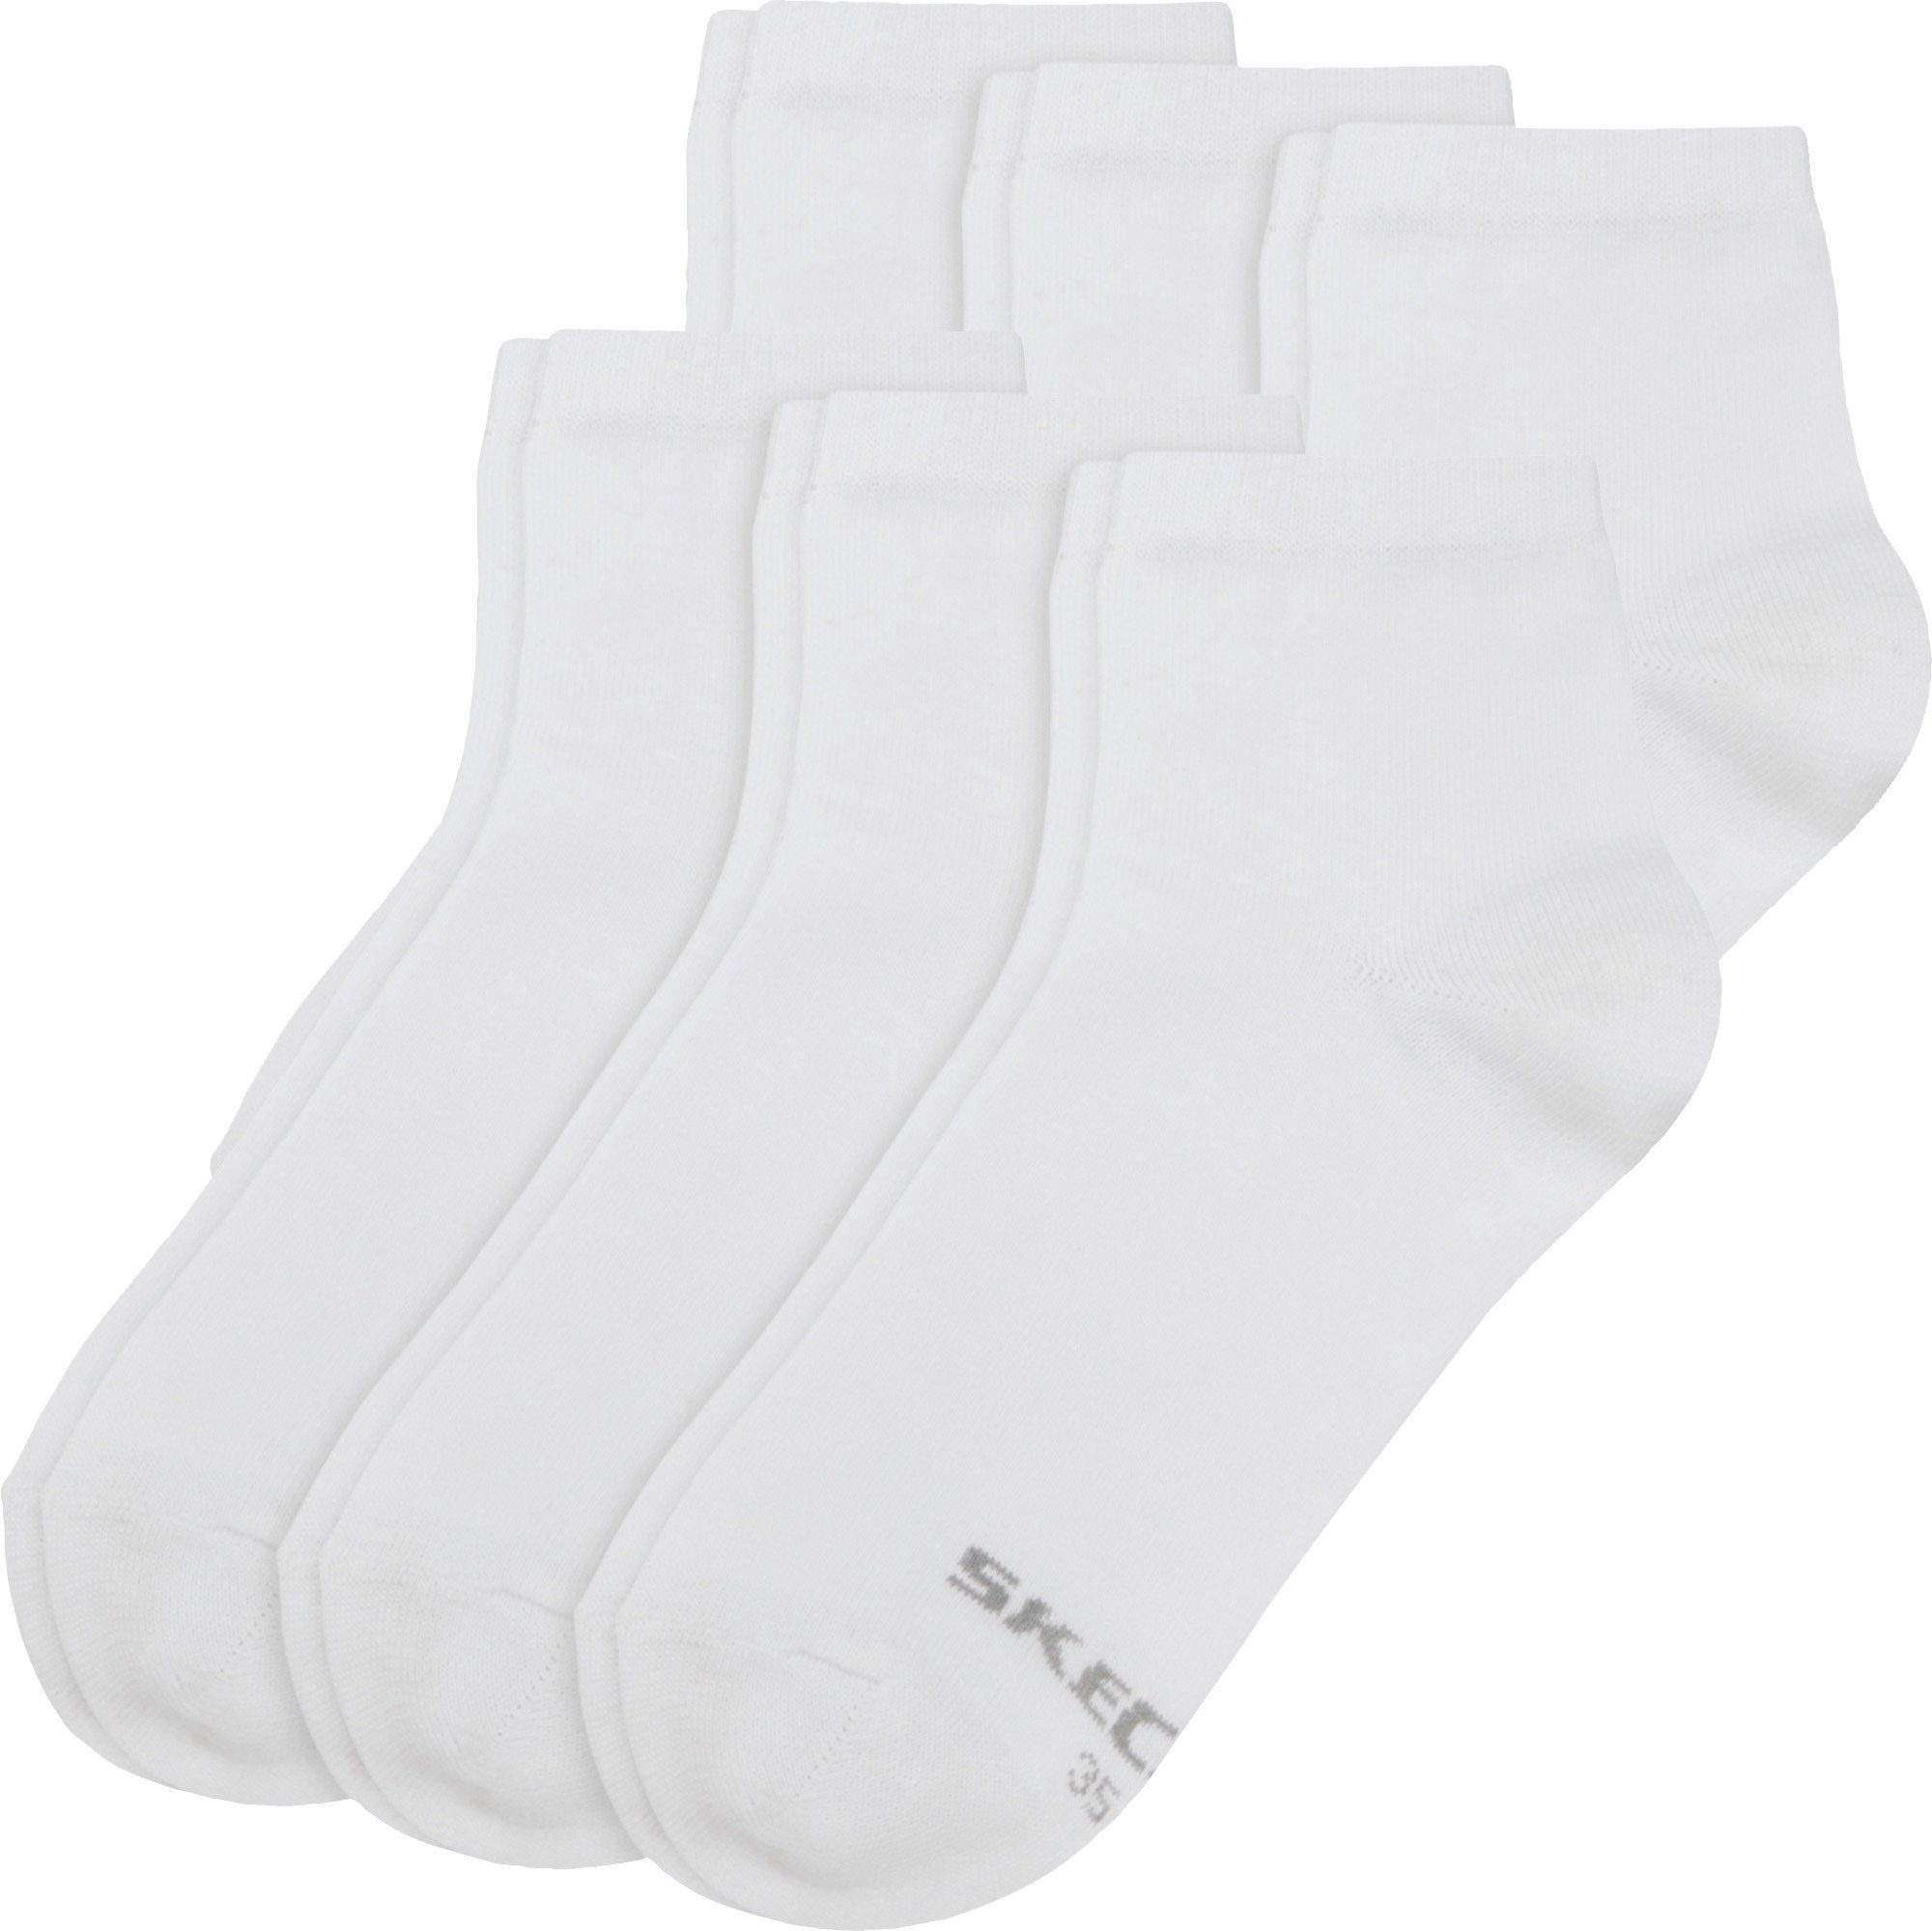 Damen-Kurzsocken weiß Uni 6 Paar Socken Skechers